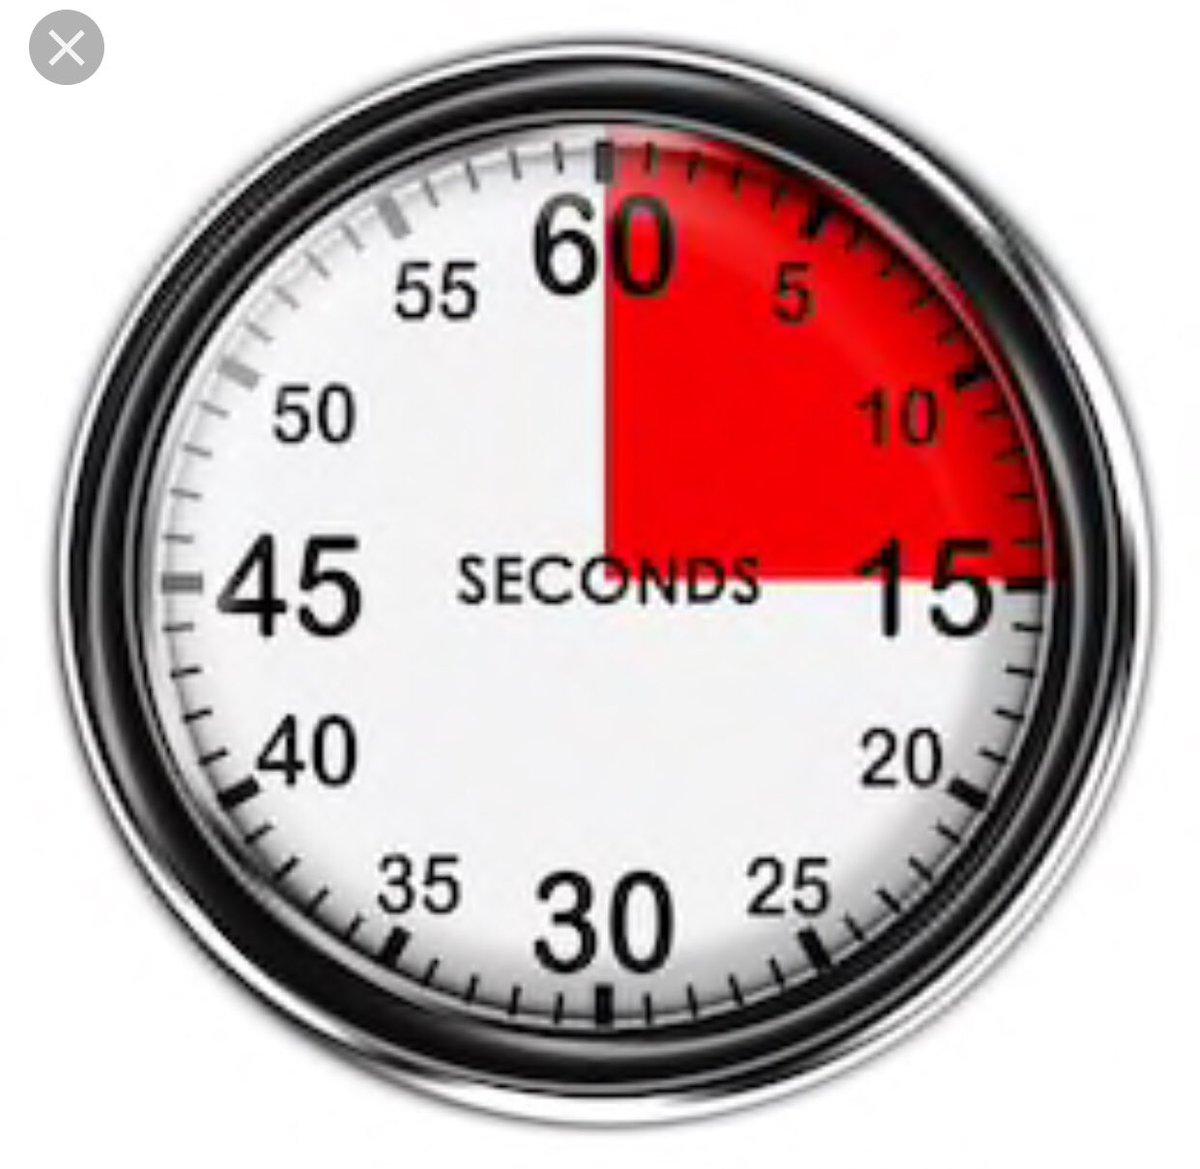 15 секунд в минутах. Секундомер 15 минут. Таймер 15 секунд. Часы 15 секунд. Таймер 15 секунд гиф.